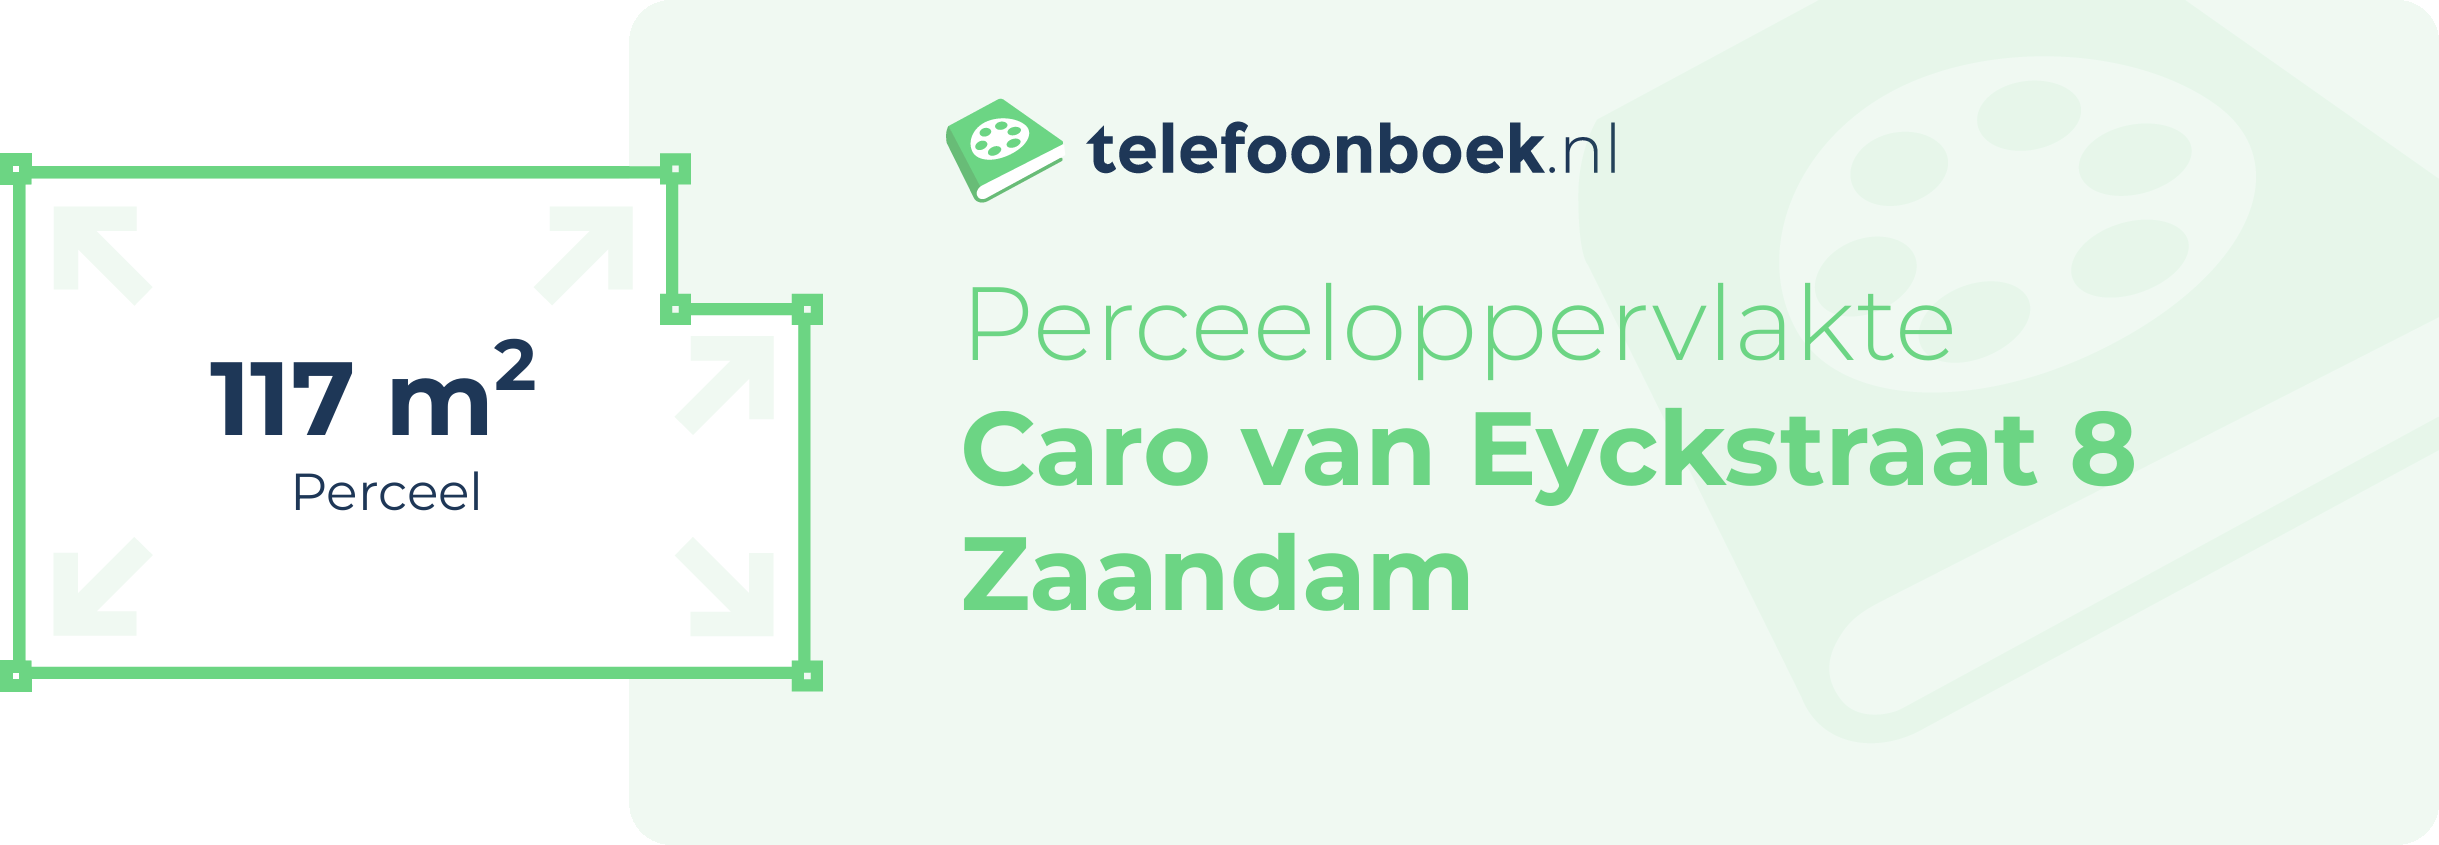 Perceeloppervlakte Caro Van Eyckstraat 8 Zaandam